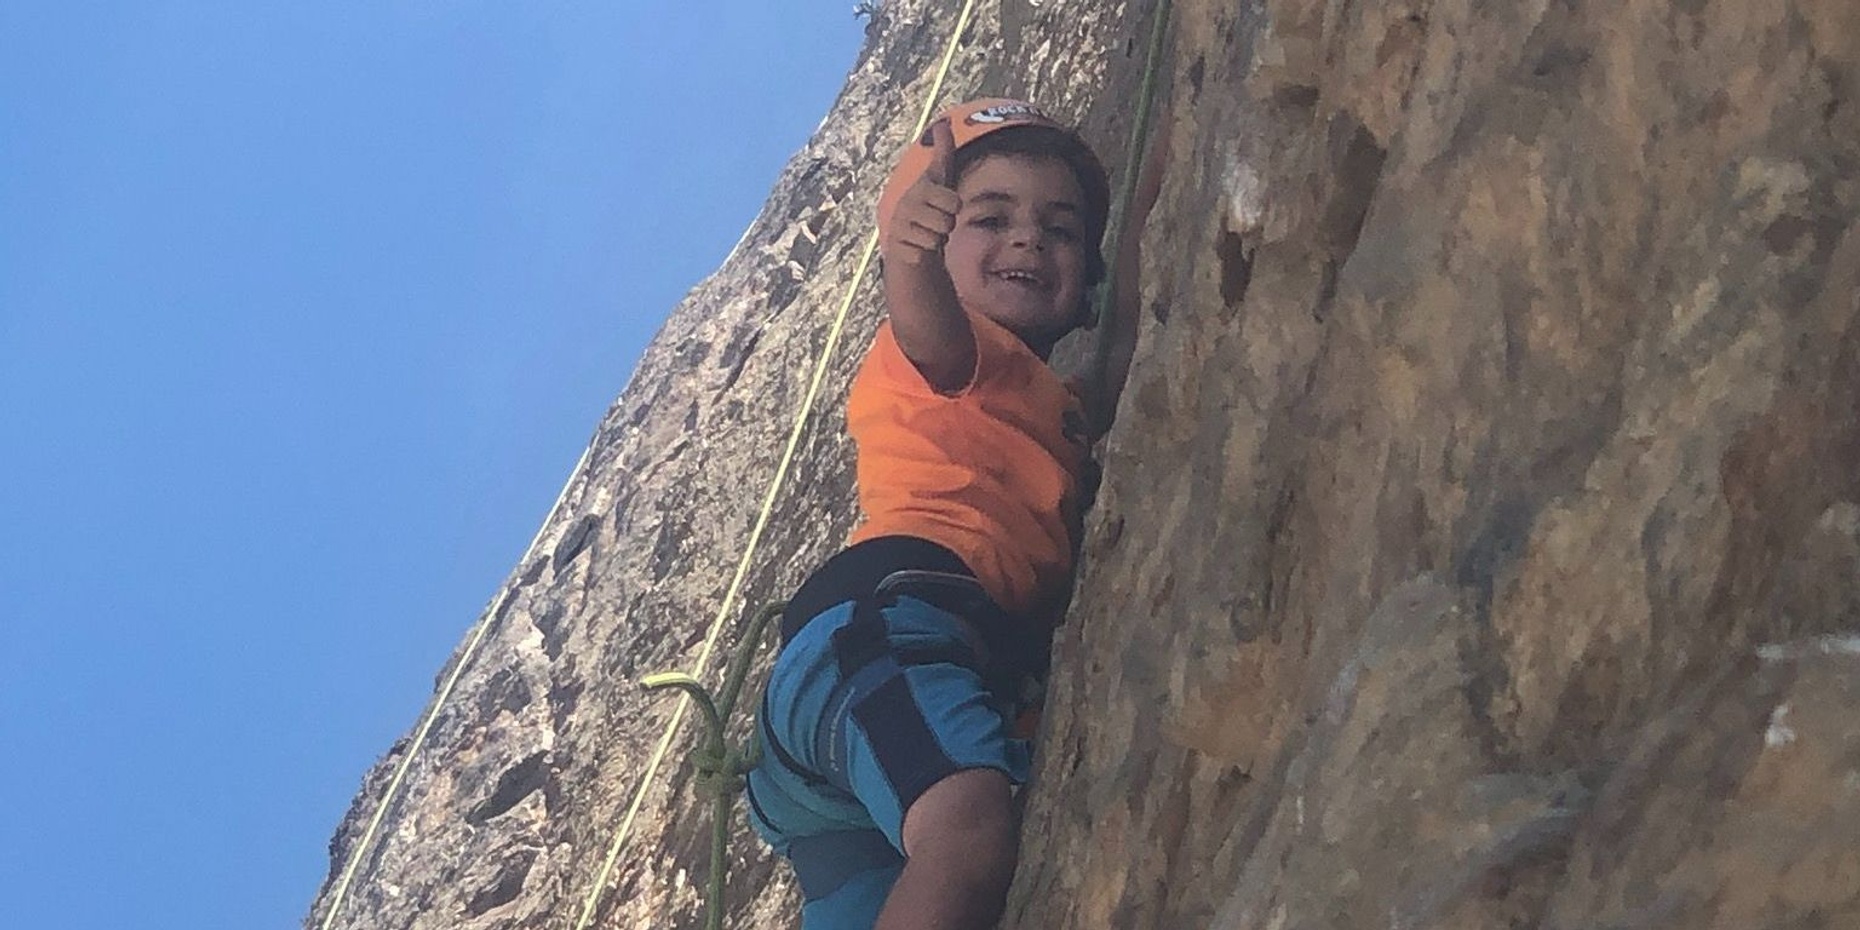 Family and Children’s Climbing Class in Malibu